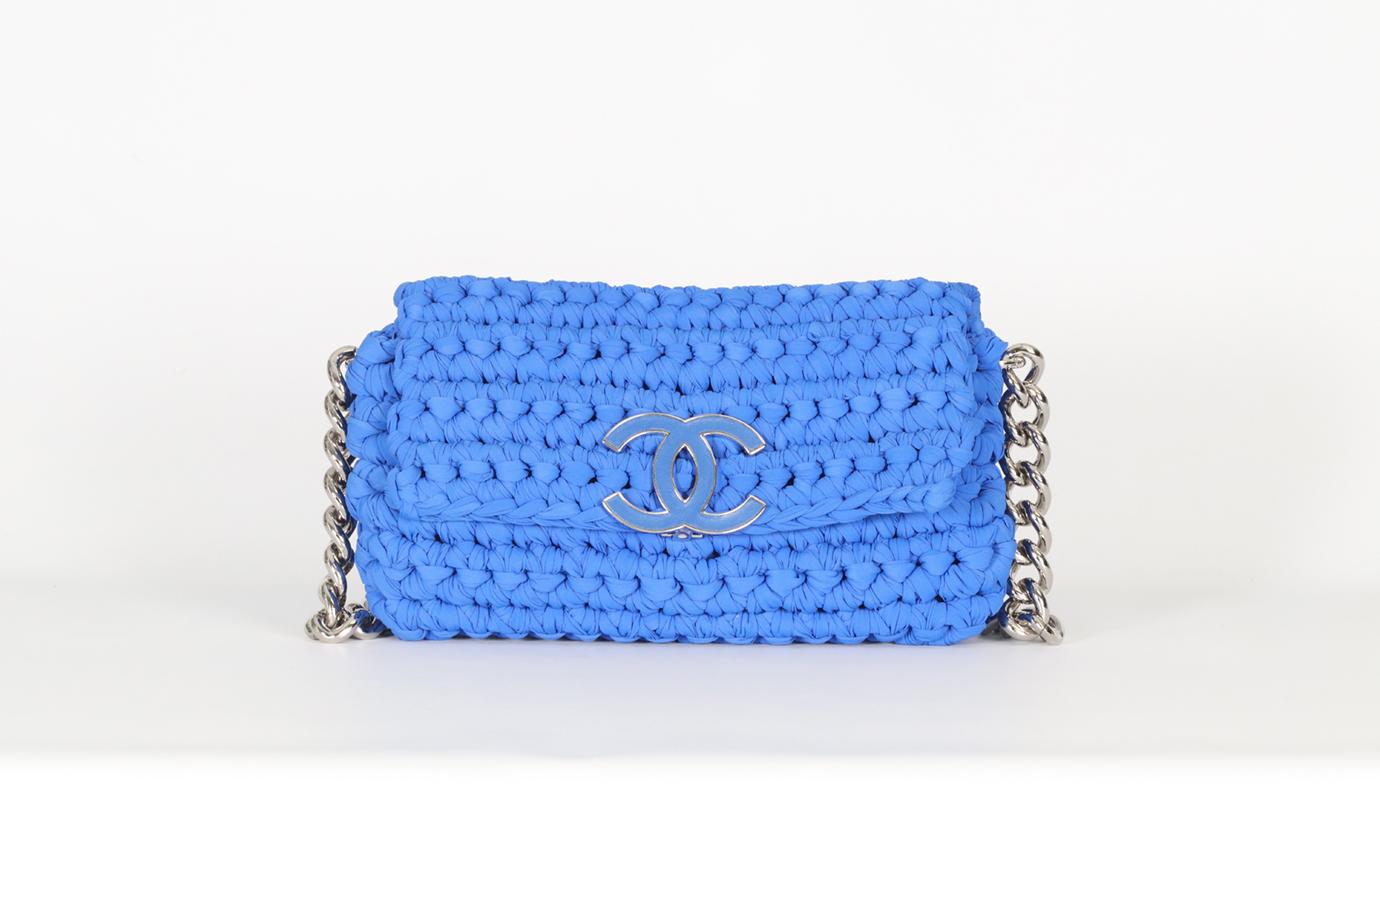 <ul>
<li>Chanel 2014 Fancy Crochet Shoulder Bag.</li>
<li>Blue.</li>
<li>Push lock fastening - Front.</li>
<li>Comes with Authenticity Card.</li>
<li>Does not come with - dustbag or box.</li>
<li><strong>Height: 6.4